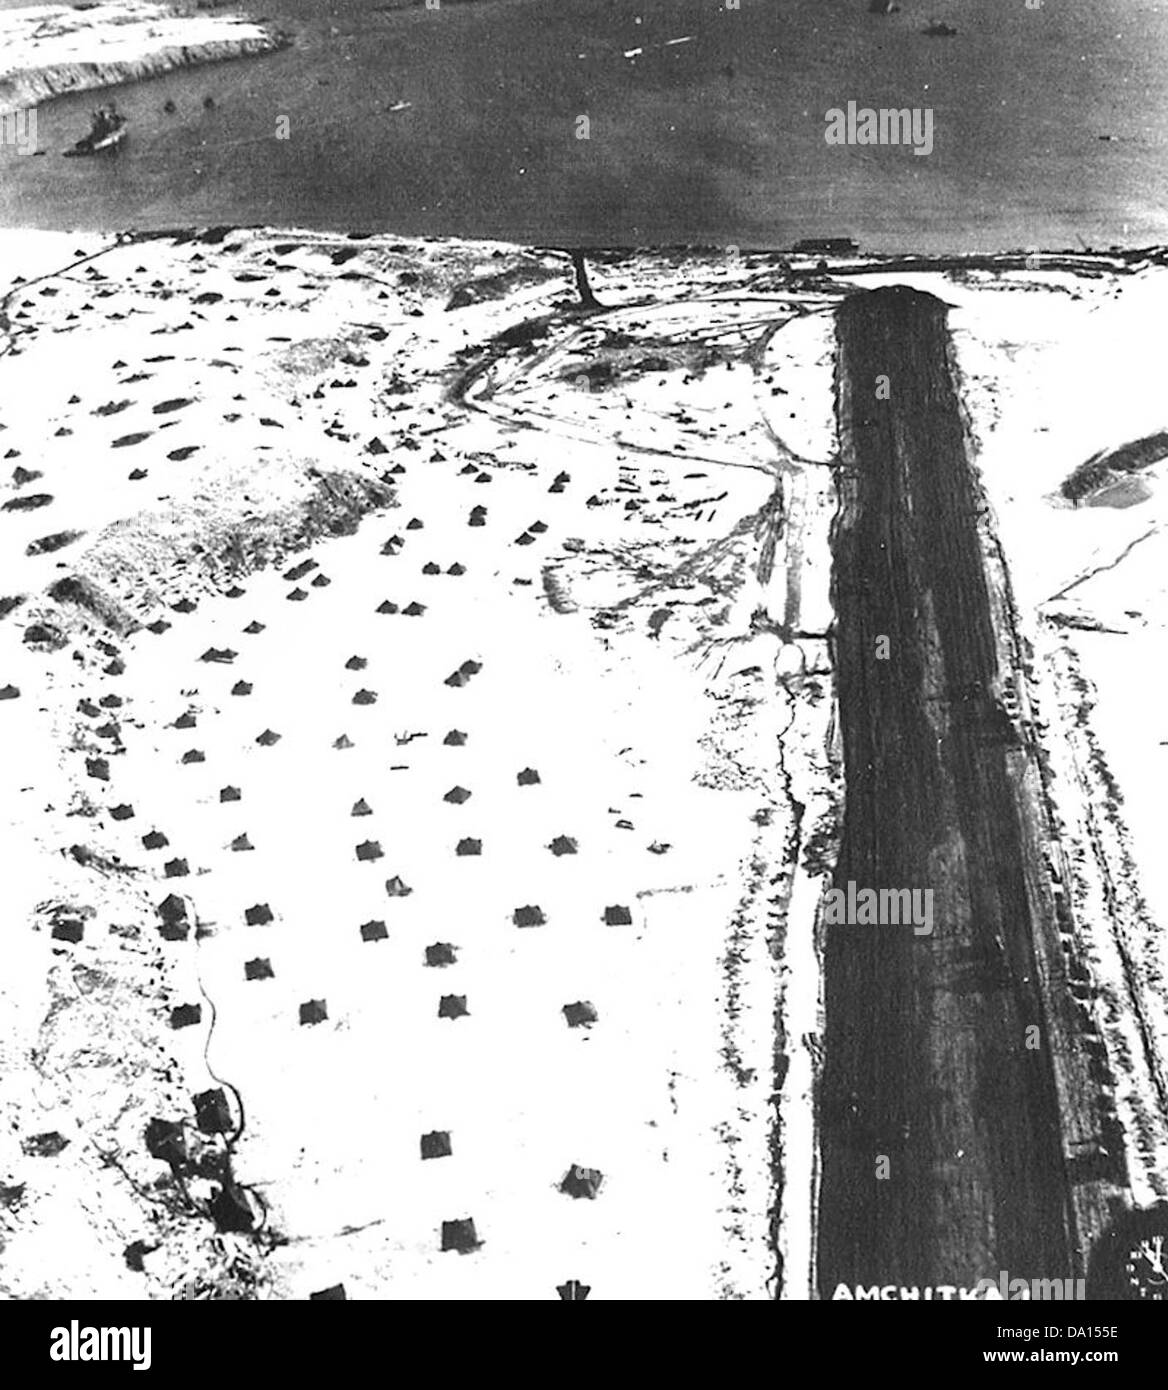 Amchitka Army Airfield January 1943 Stock Photo